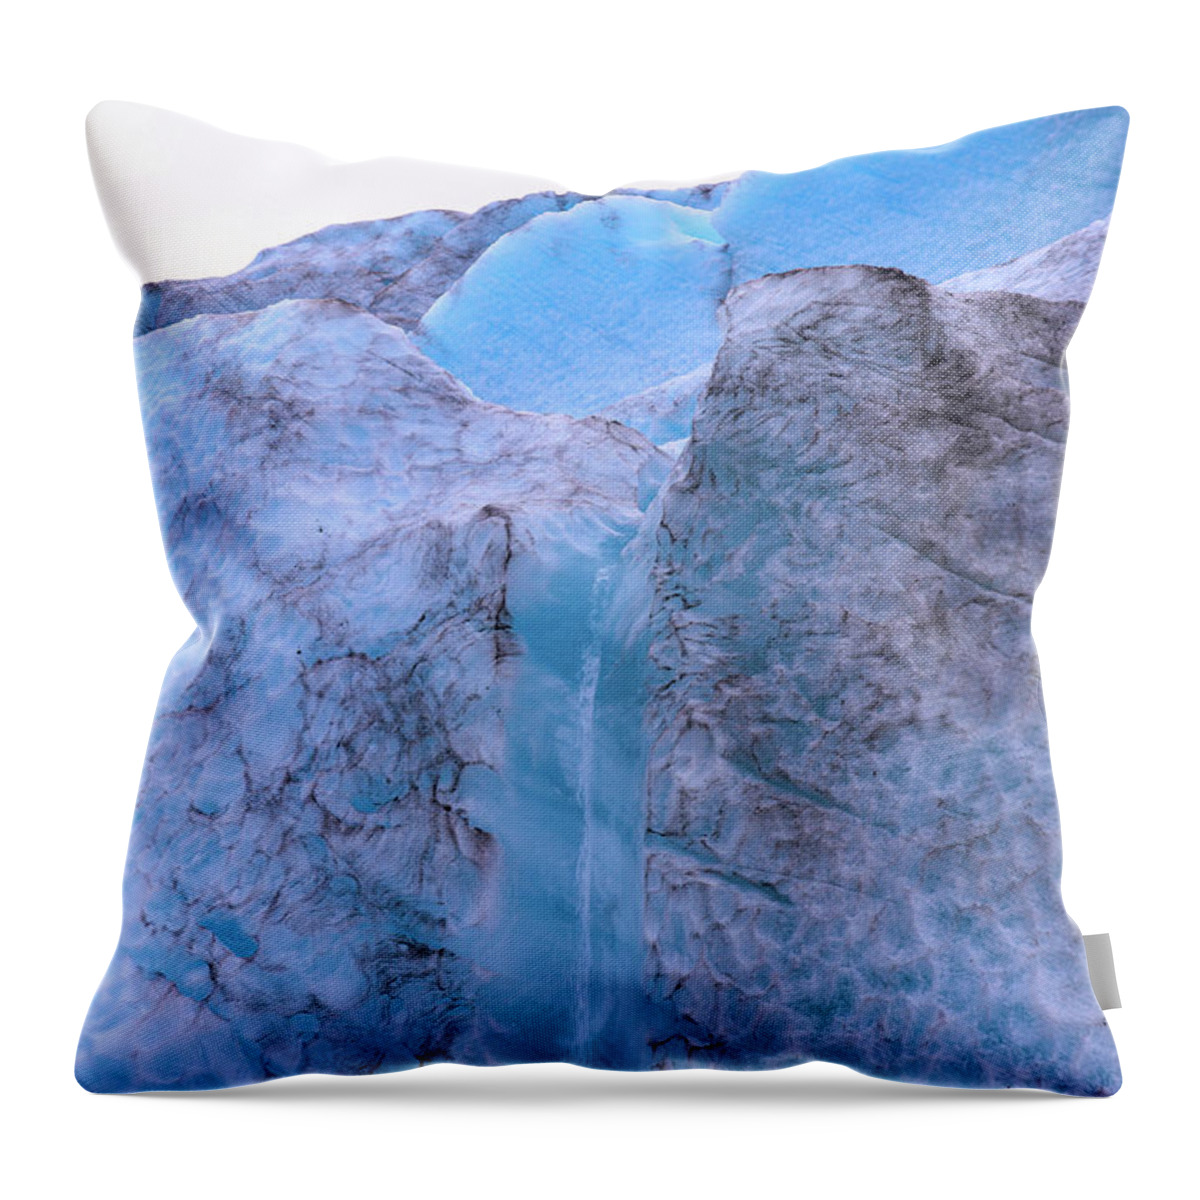 Alaska Throw Pillow featuring the photograph A Glacial Spigot by Ed Williams